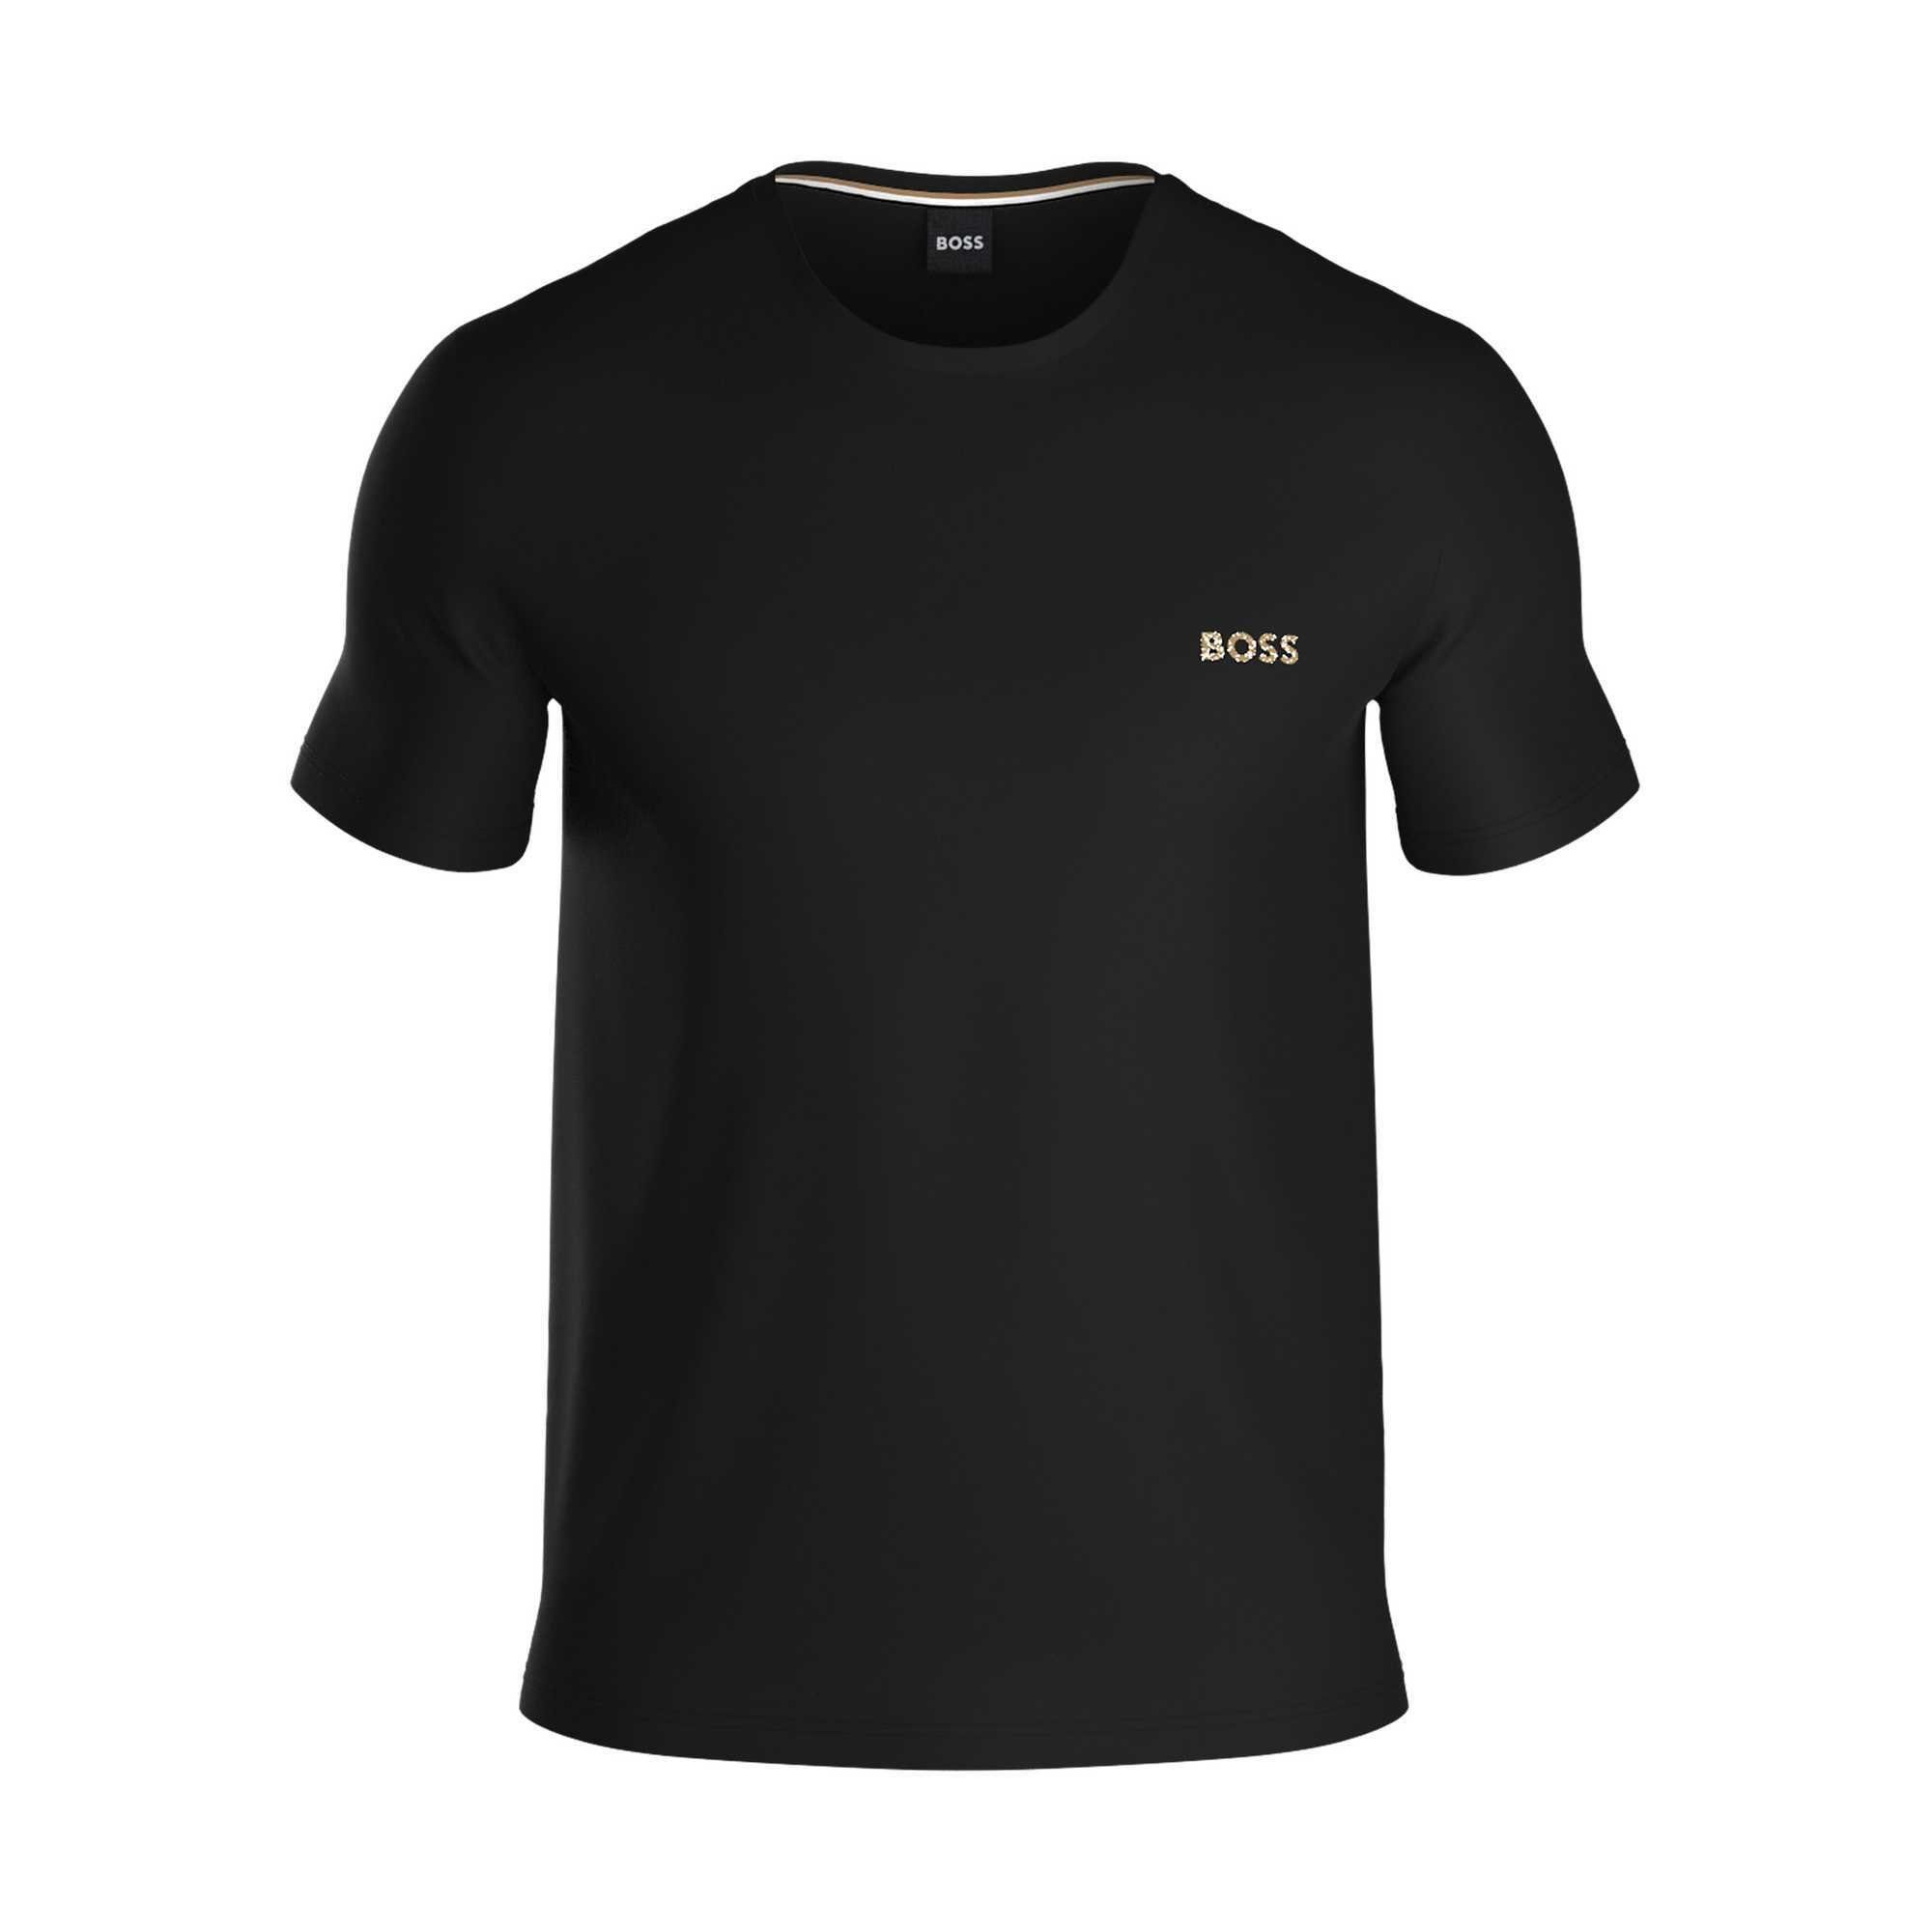 BOSS T-Shirt Herren T-Shirt - Mix & Match, Rundhals, Baumwolle Schwarz